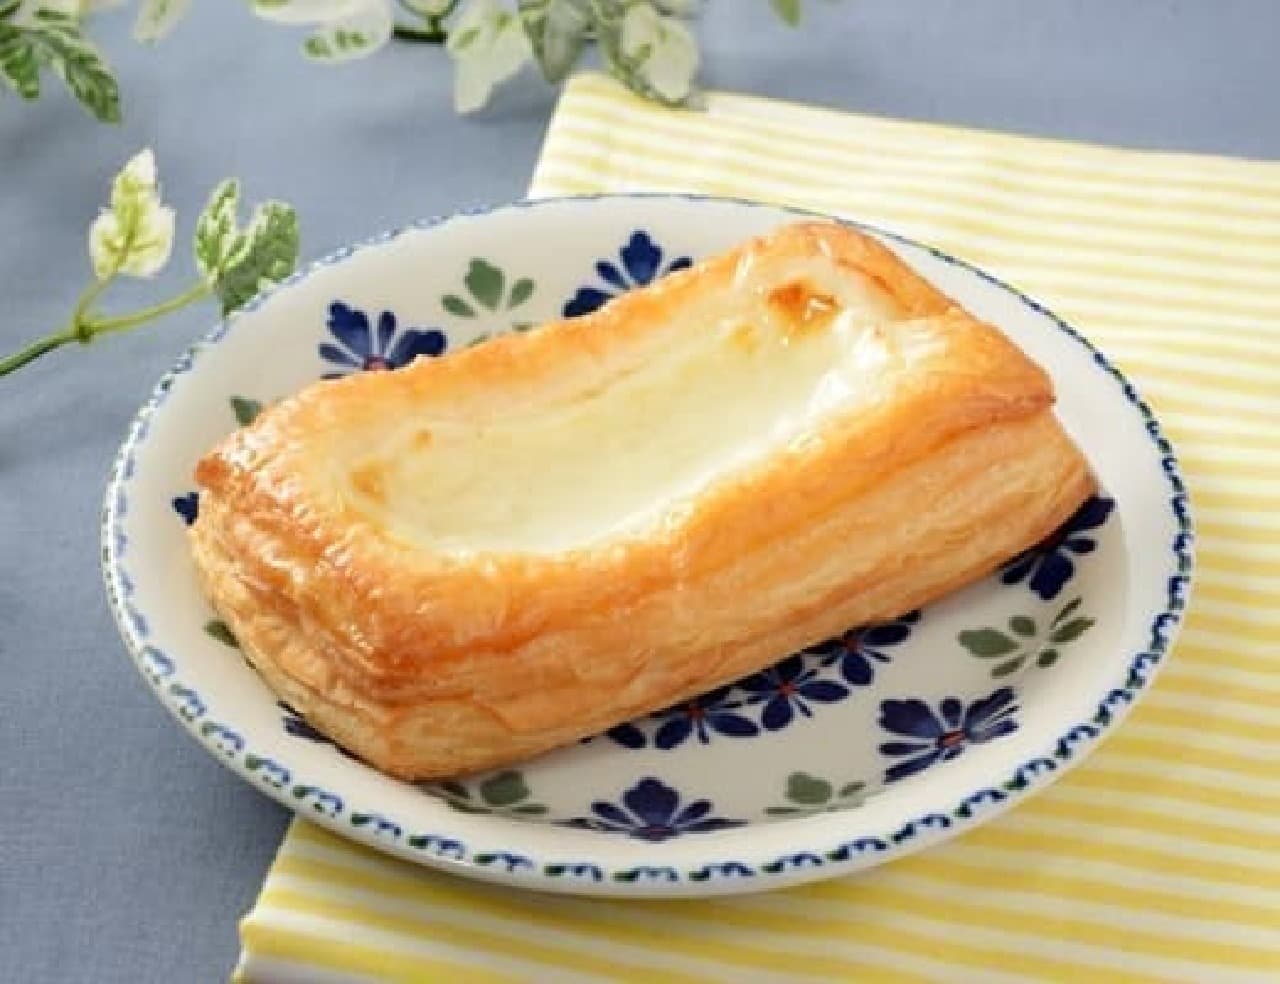 Lawson "Danish pastry of matino bread fermented cream"